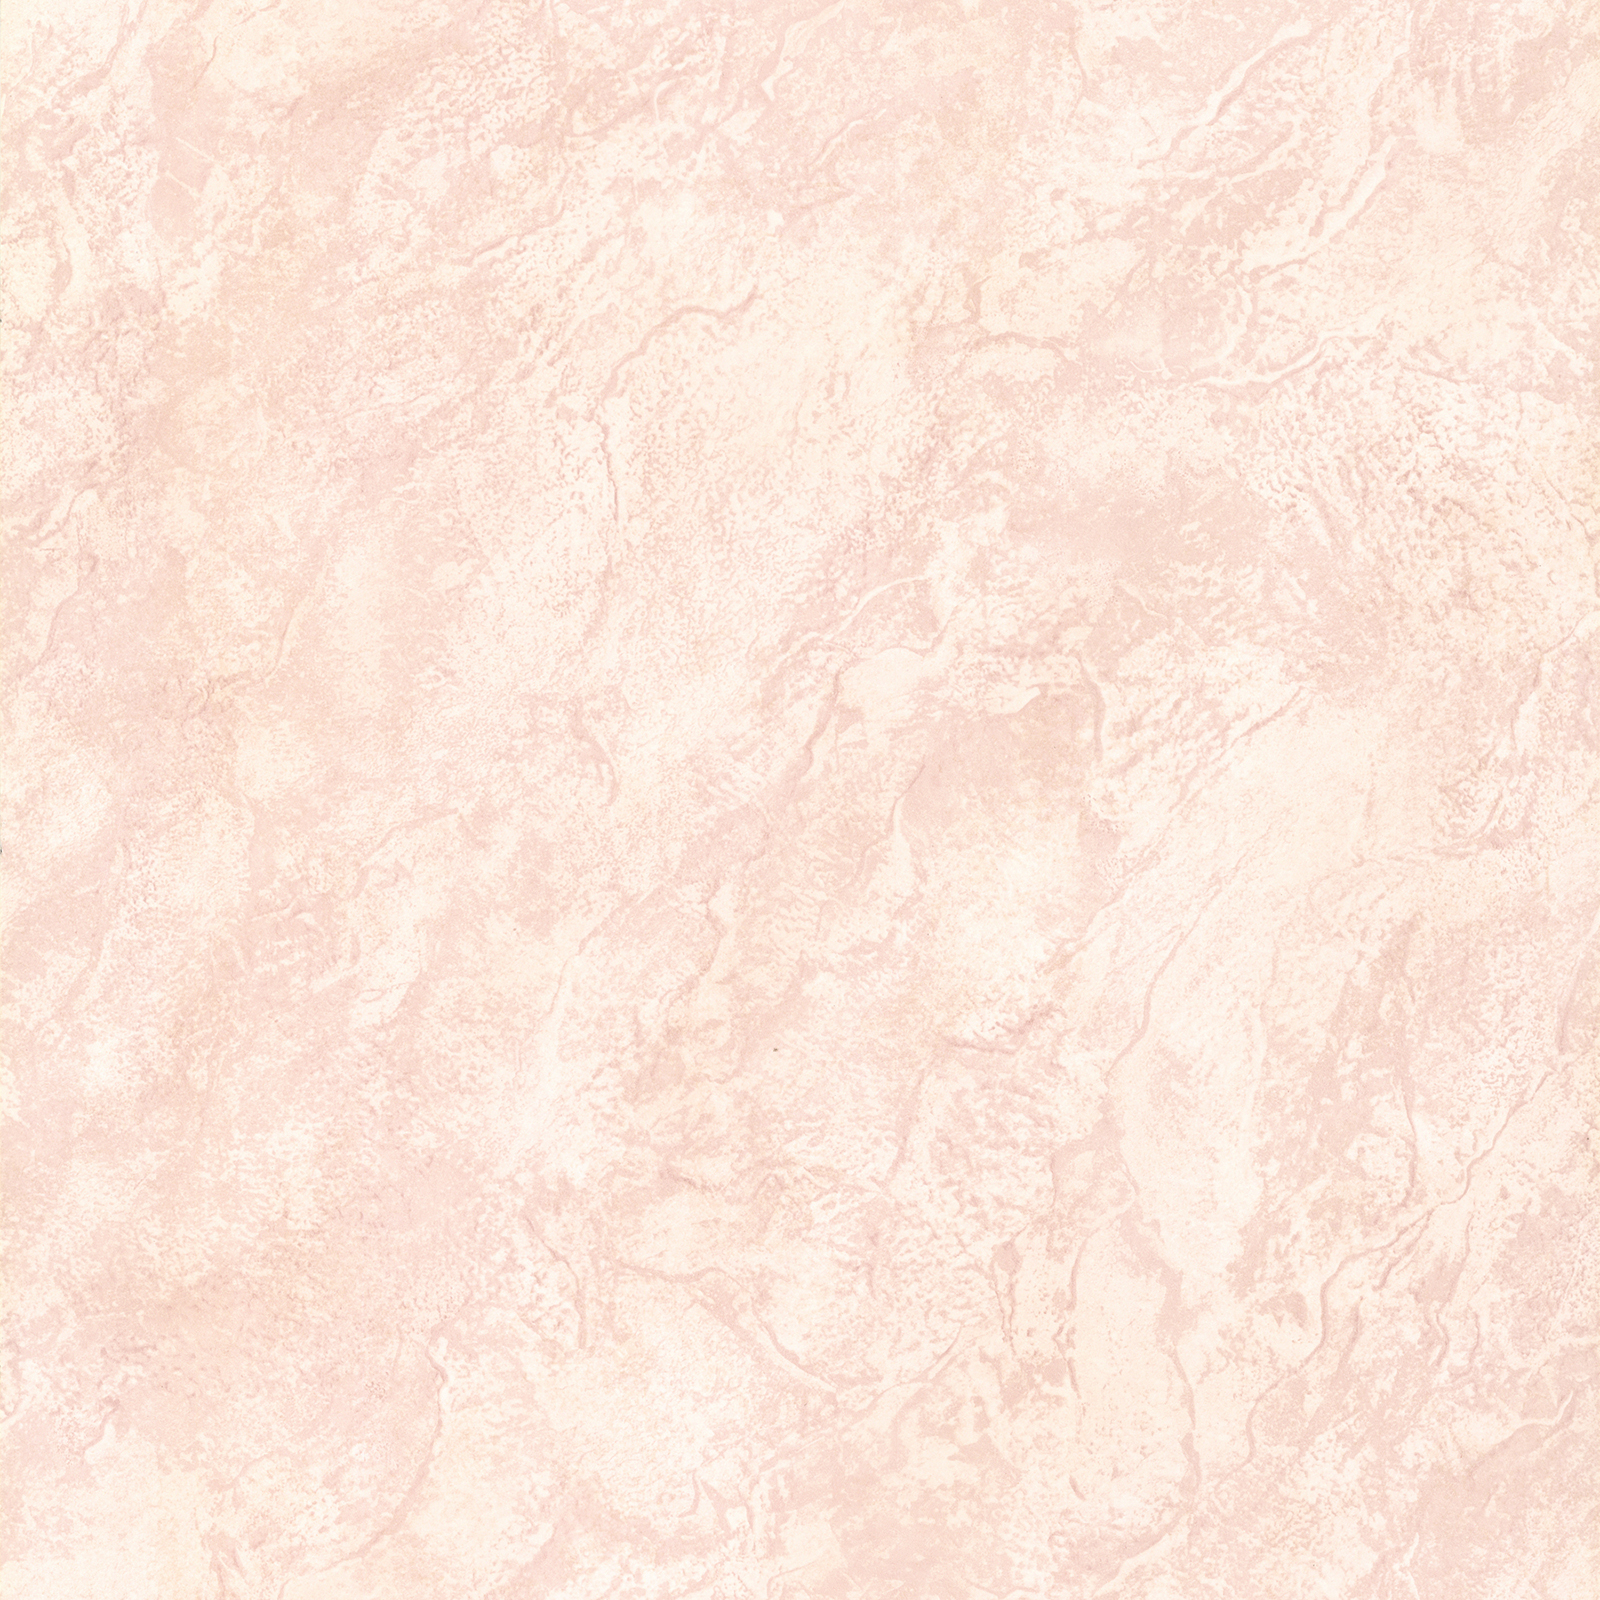 Rosetta Blush Marble Texture Wallpaper